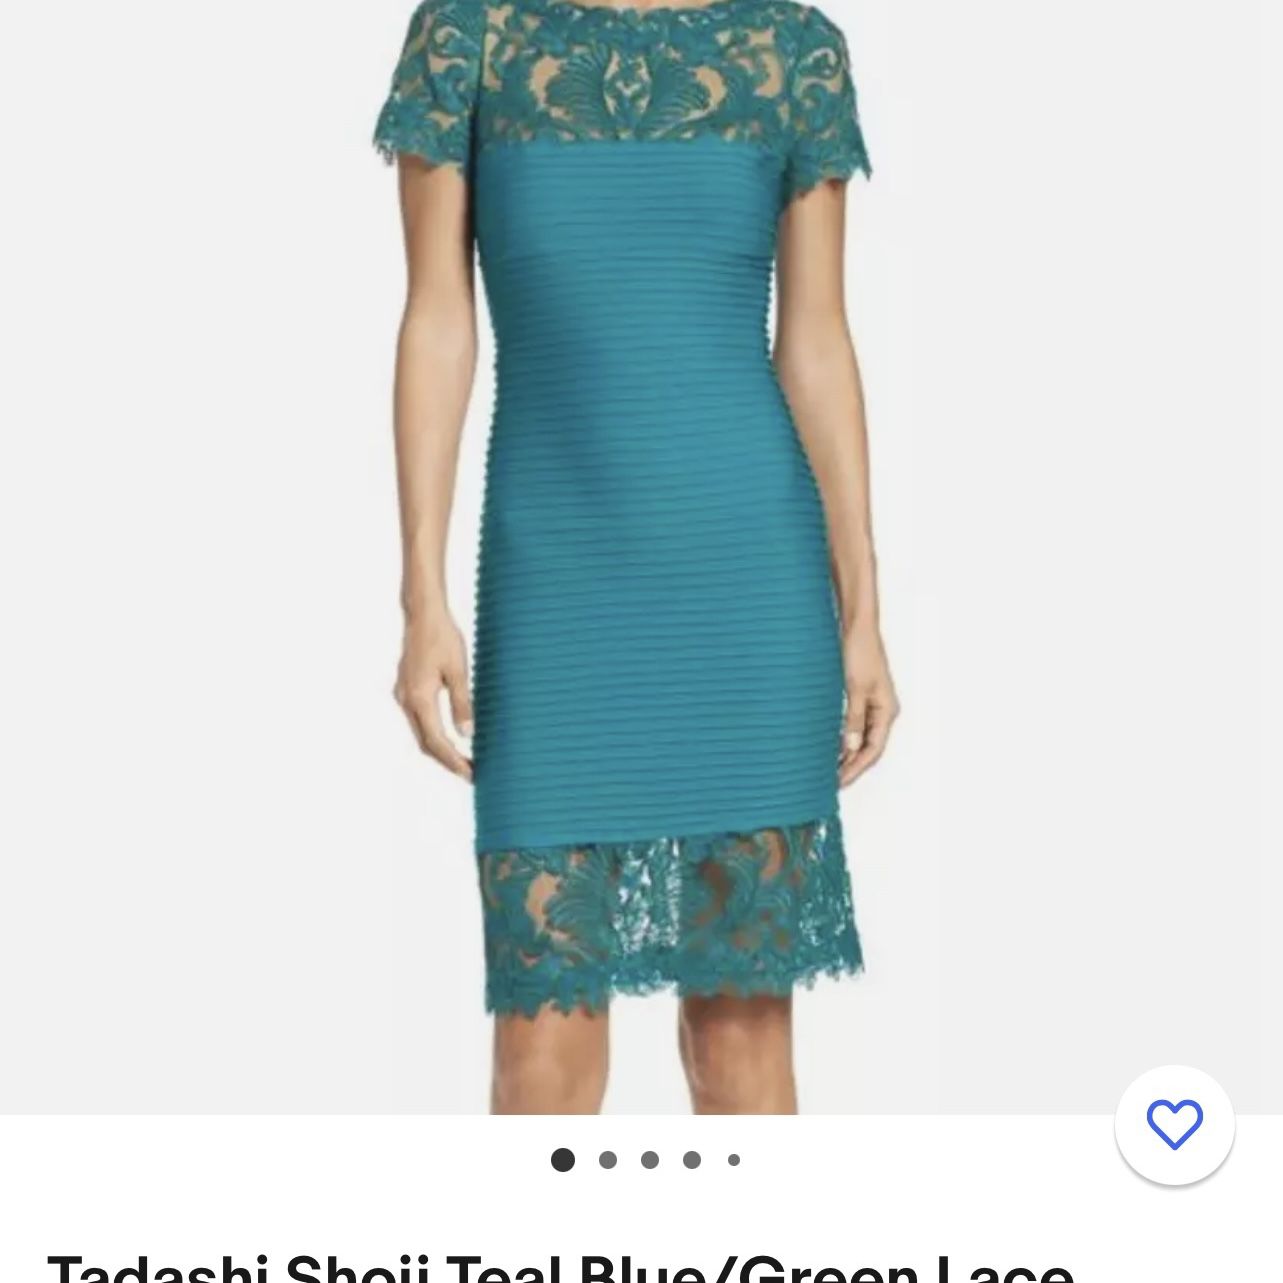 TADASHI SHOJI BRAND NEW Aqua Dress LARGE